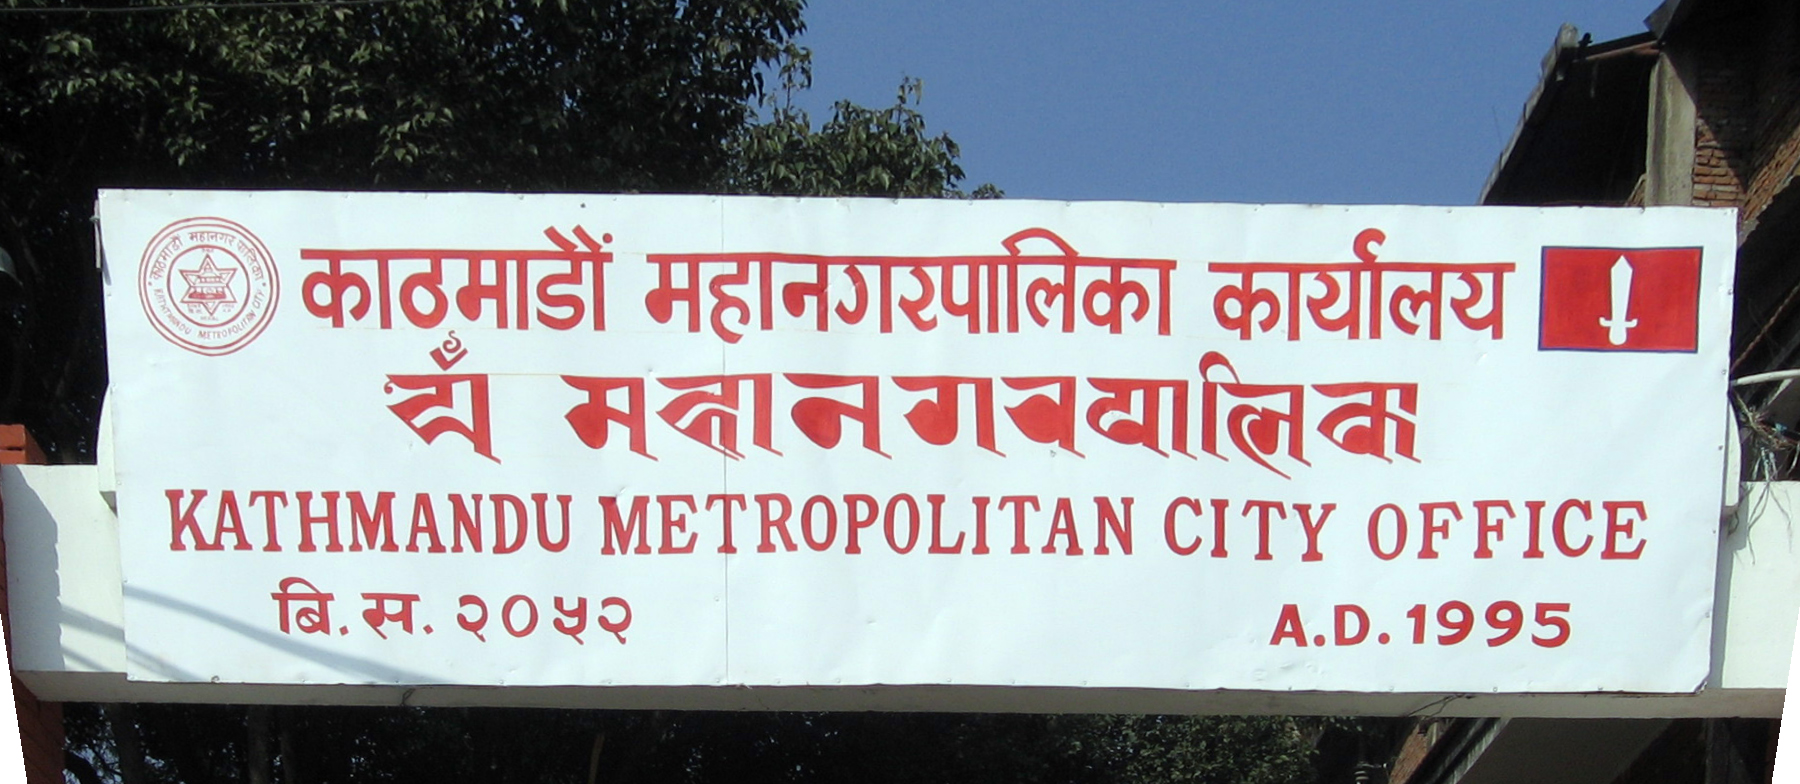 The Kathmandu metropolitan city central office